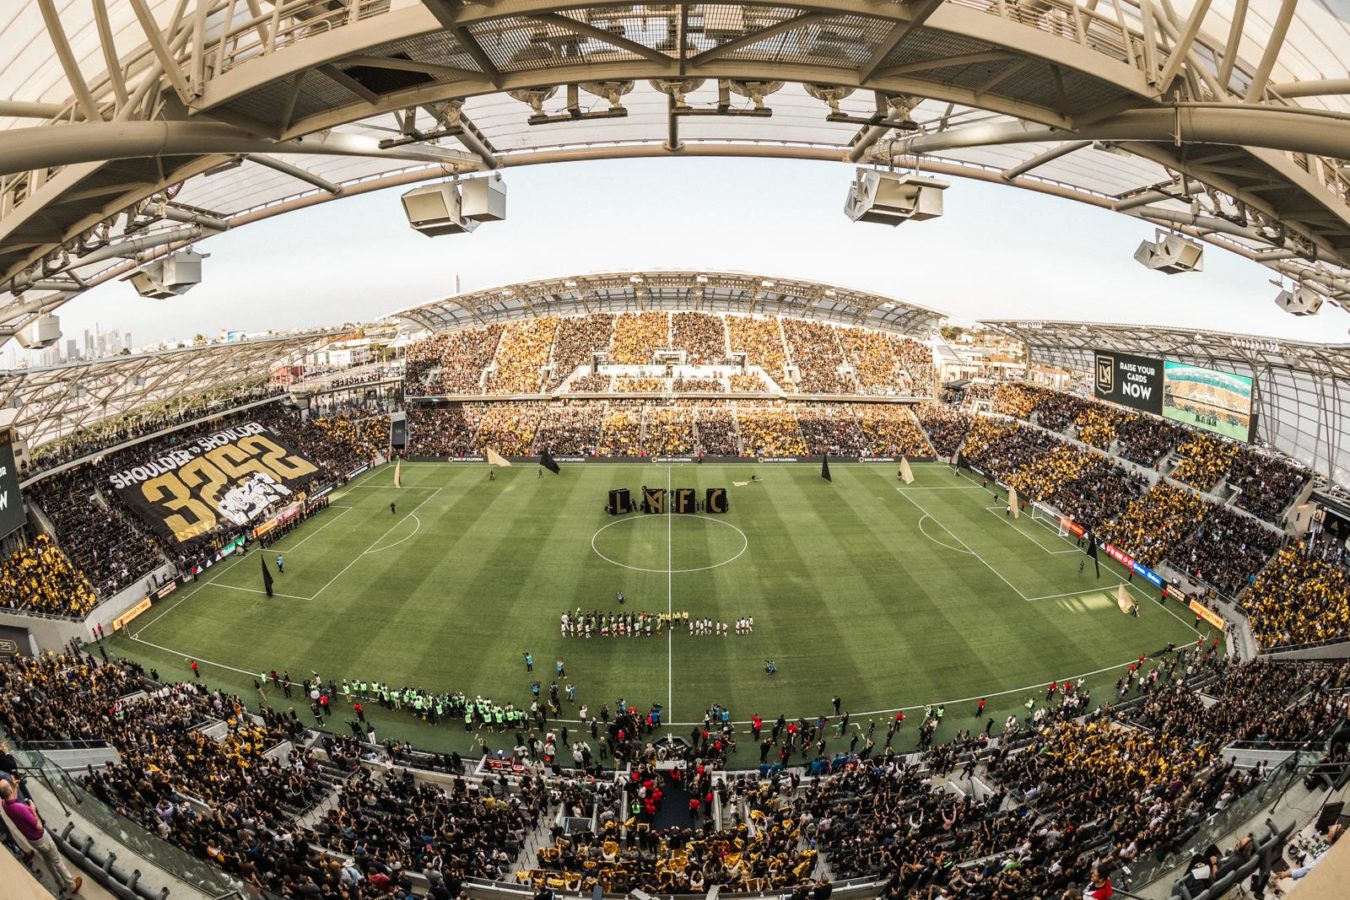 Angel City FC to play at Banc of California Stadium - Soccer Stadium Digest